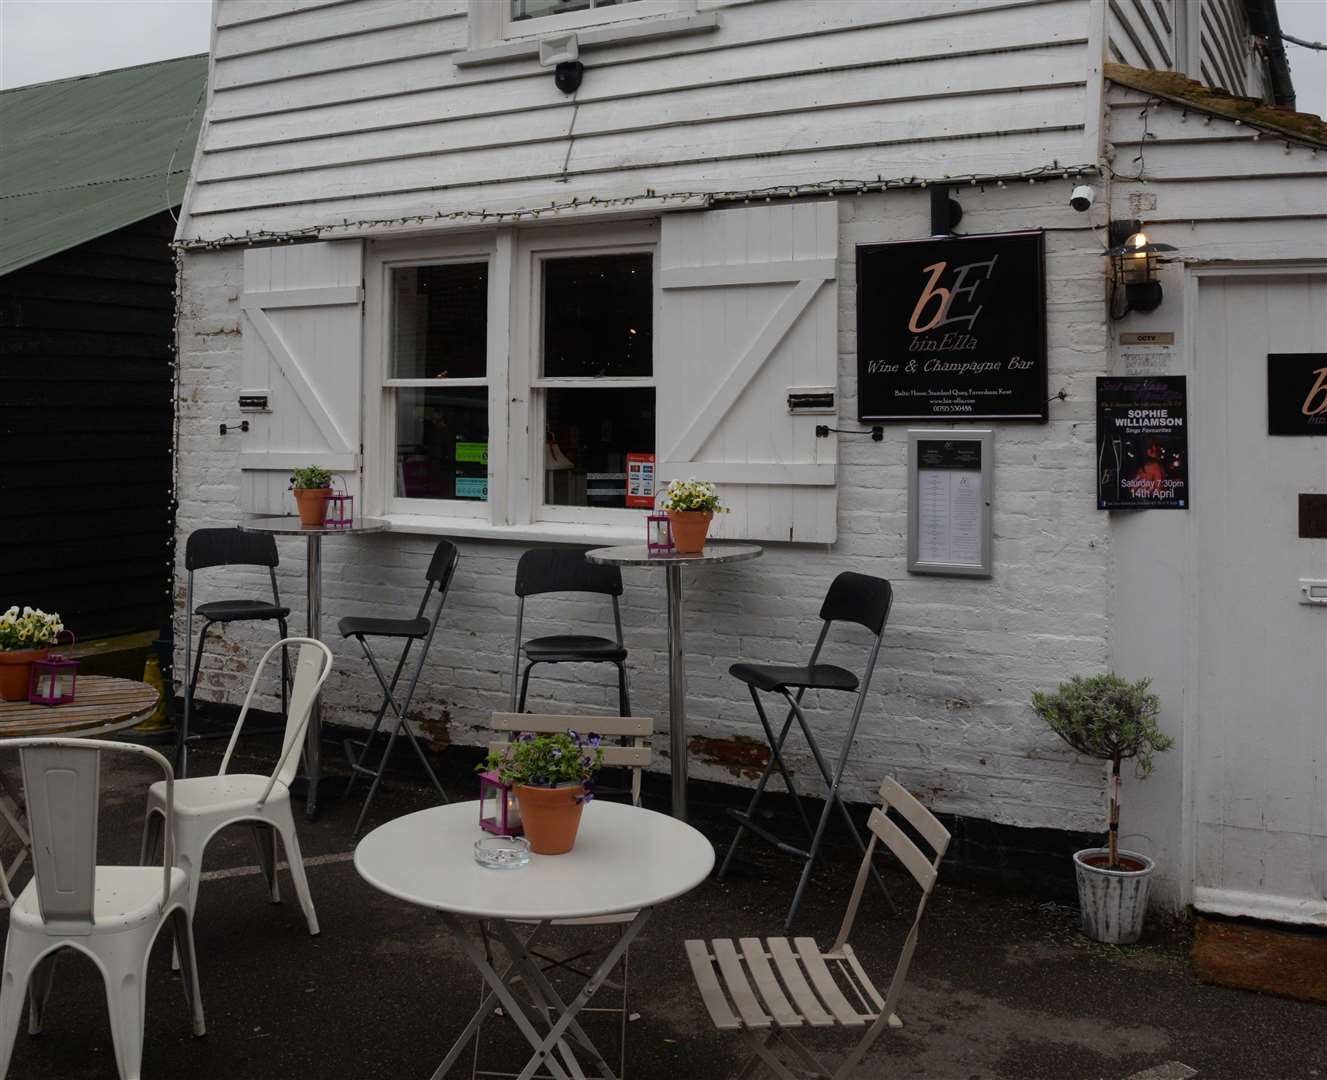 The Binella wine bar and restaraunt on Standard Quay, Faverham. Picture: Chris Davey